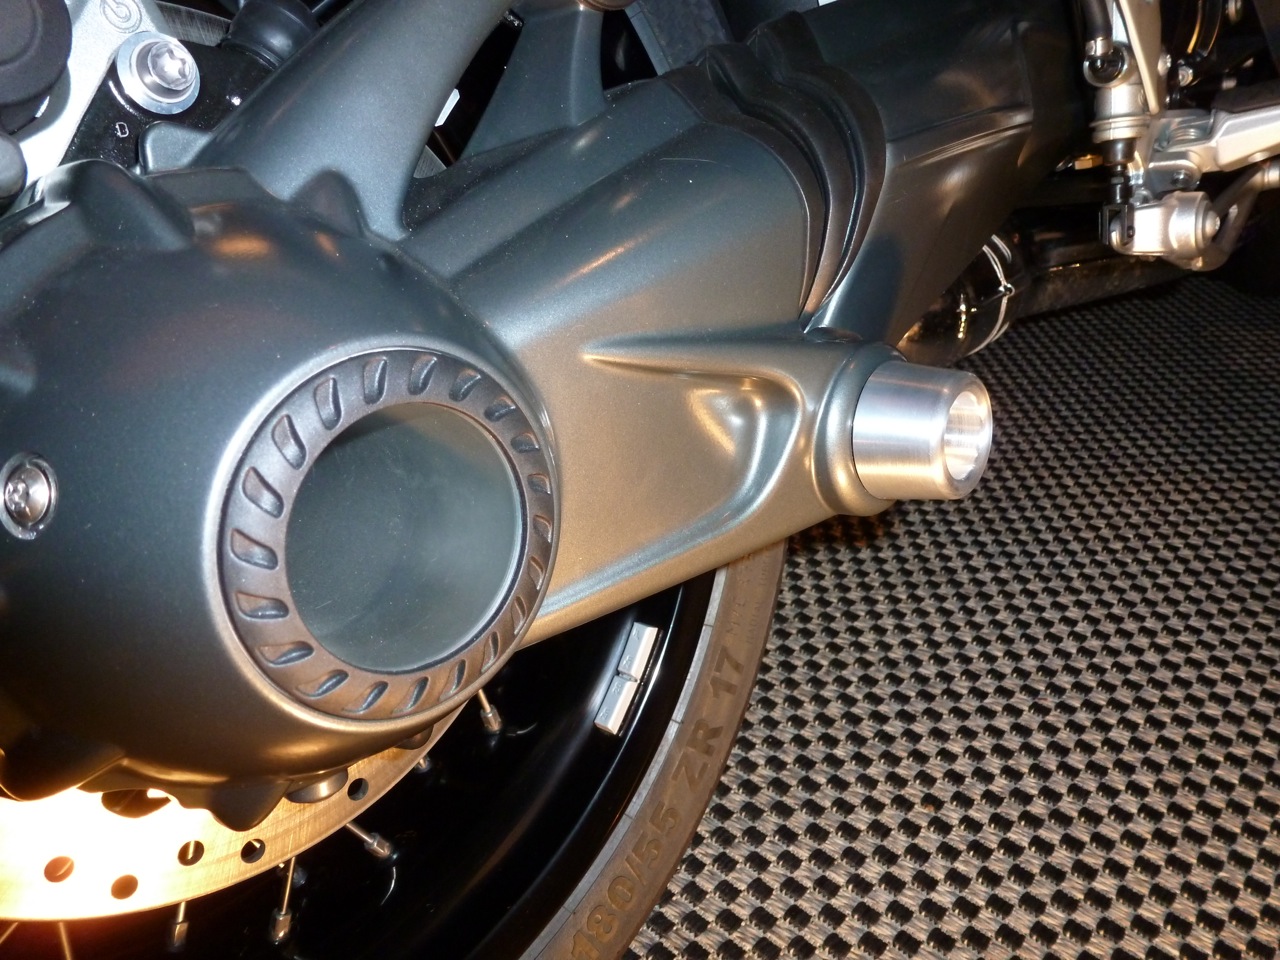 Kaufe Motorrad Rad Universal Schutz Pad Rahmen Slider Anti-Fall Crash Pad  für BMW T RnineT K1300 1200 RS GT